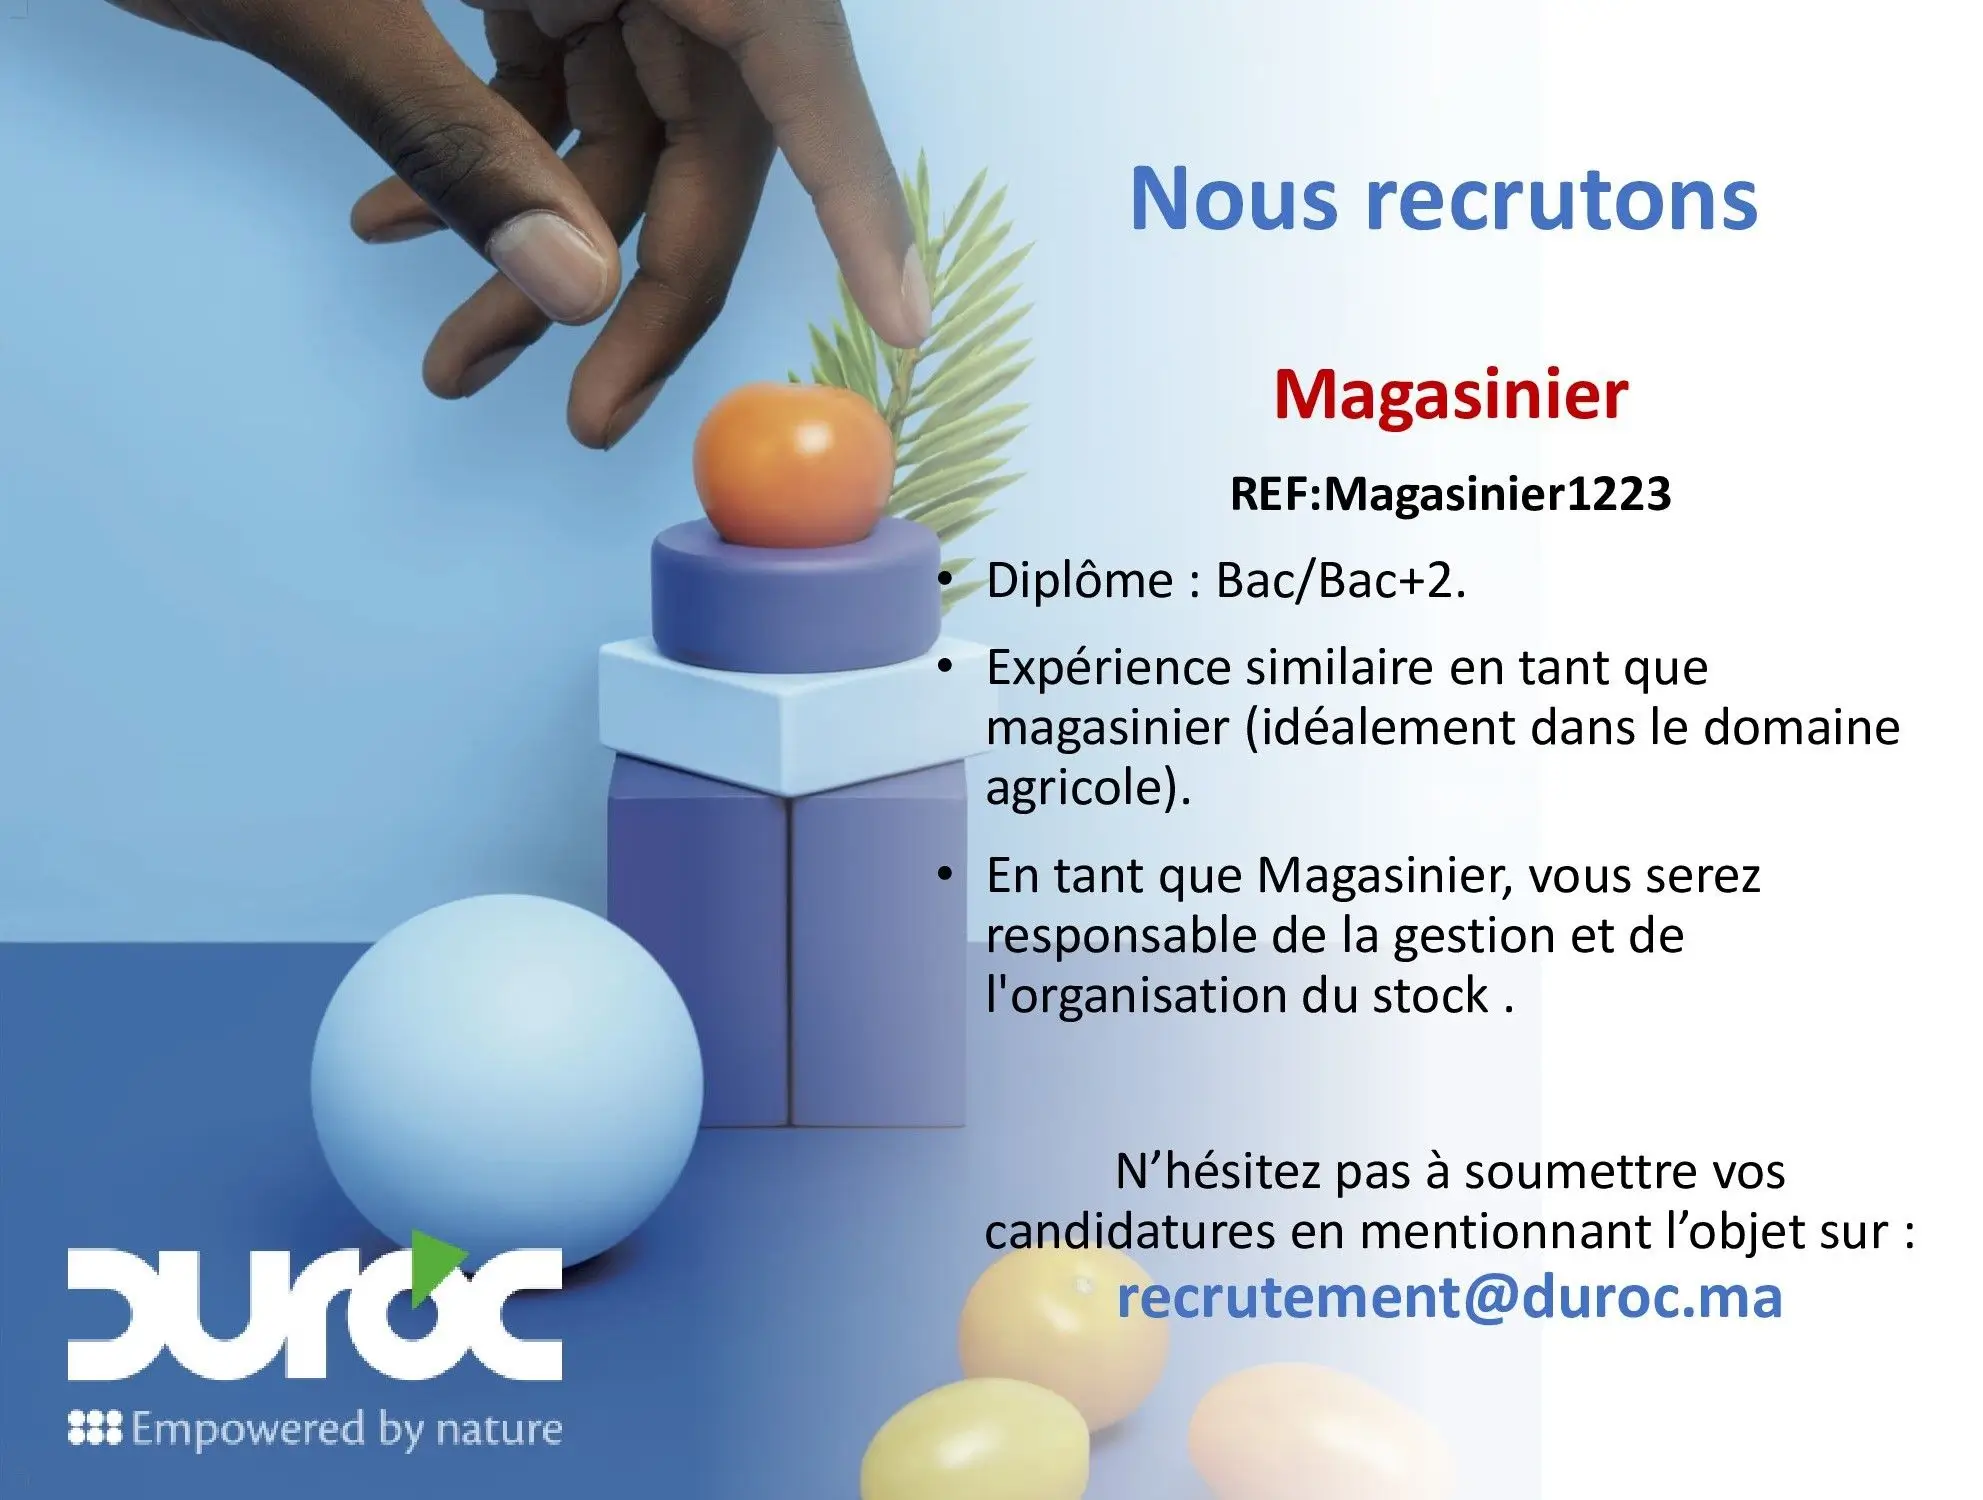 Duroc recrute des Magasinier Bac Bac+2